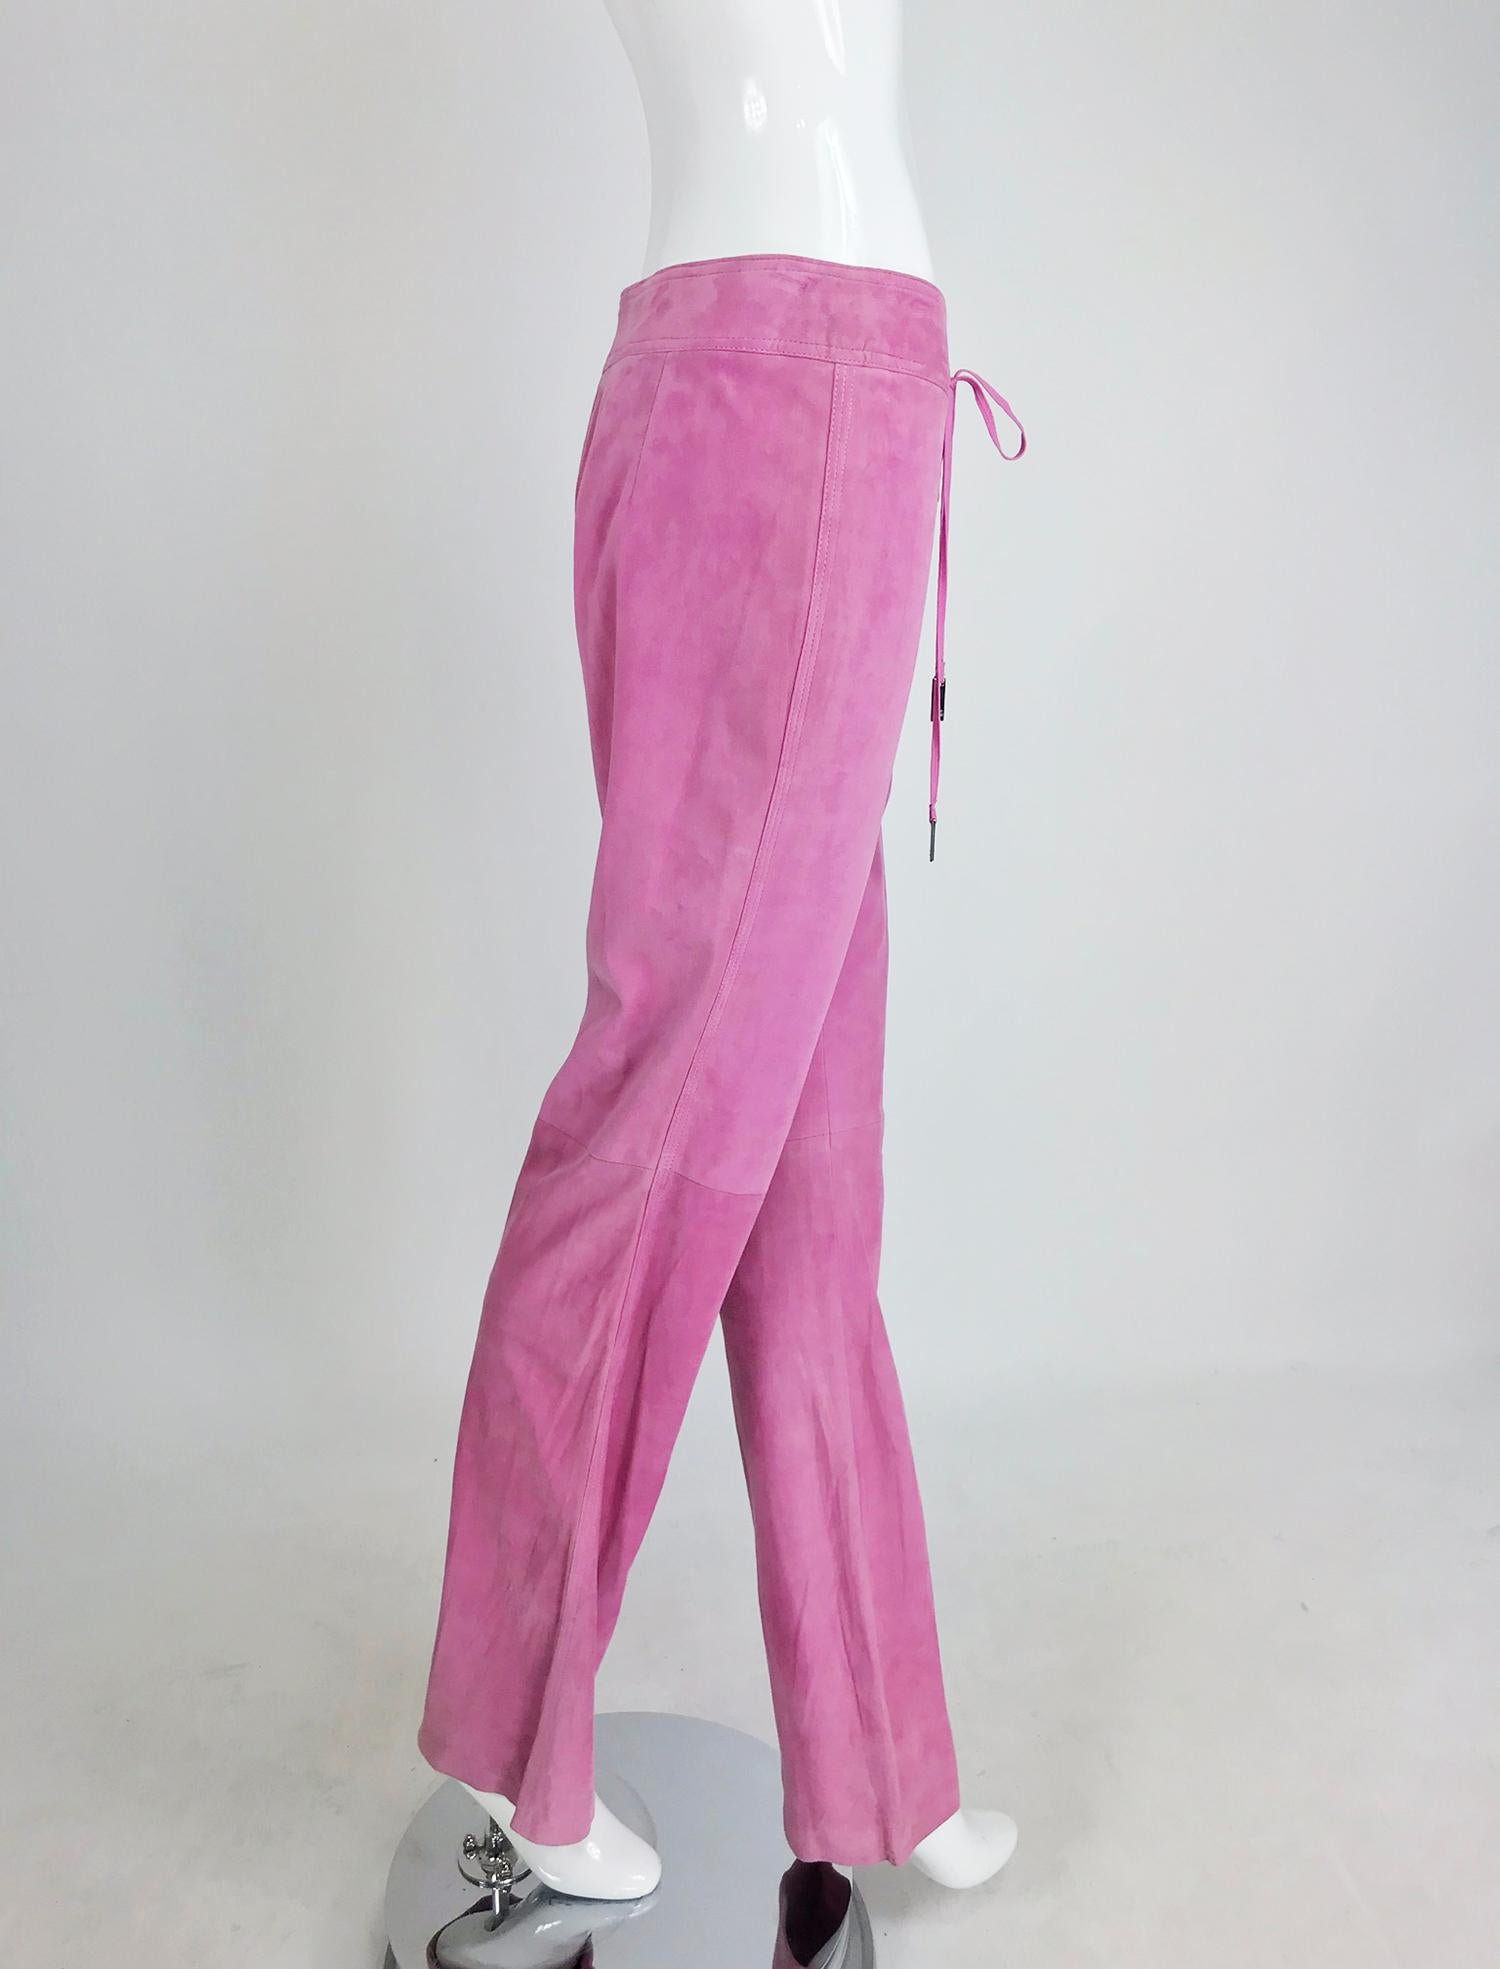 pink suede pants